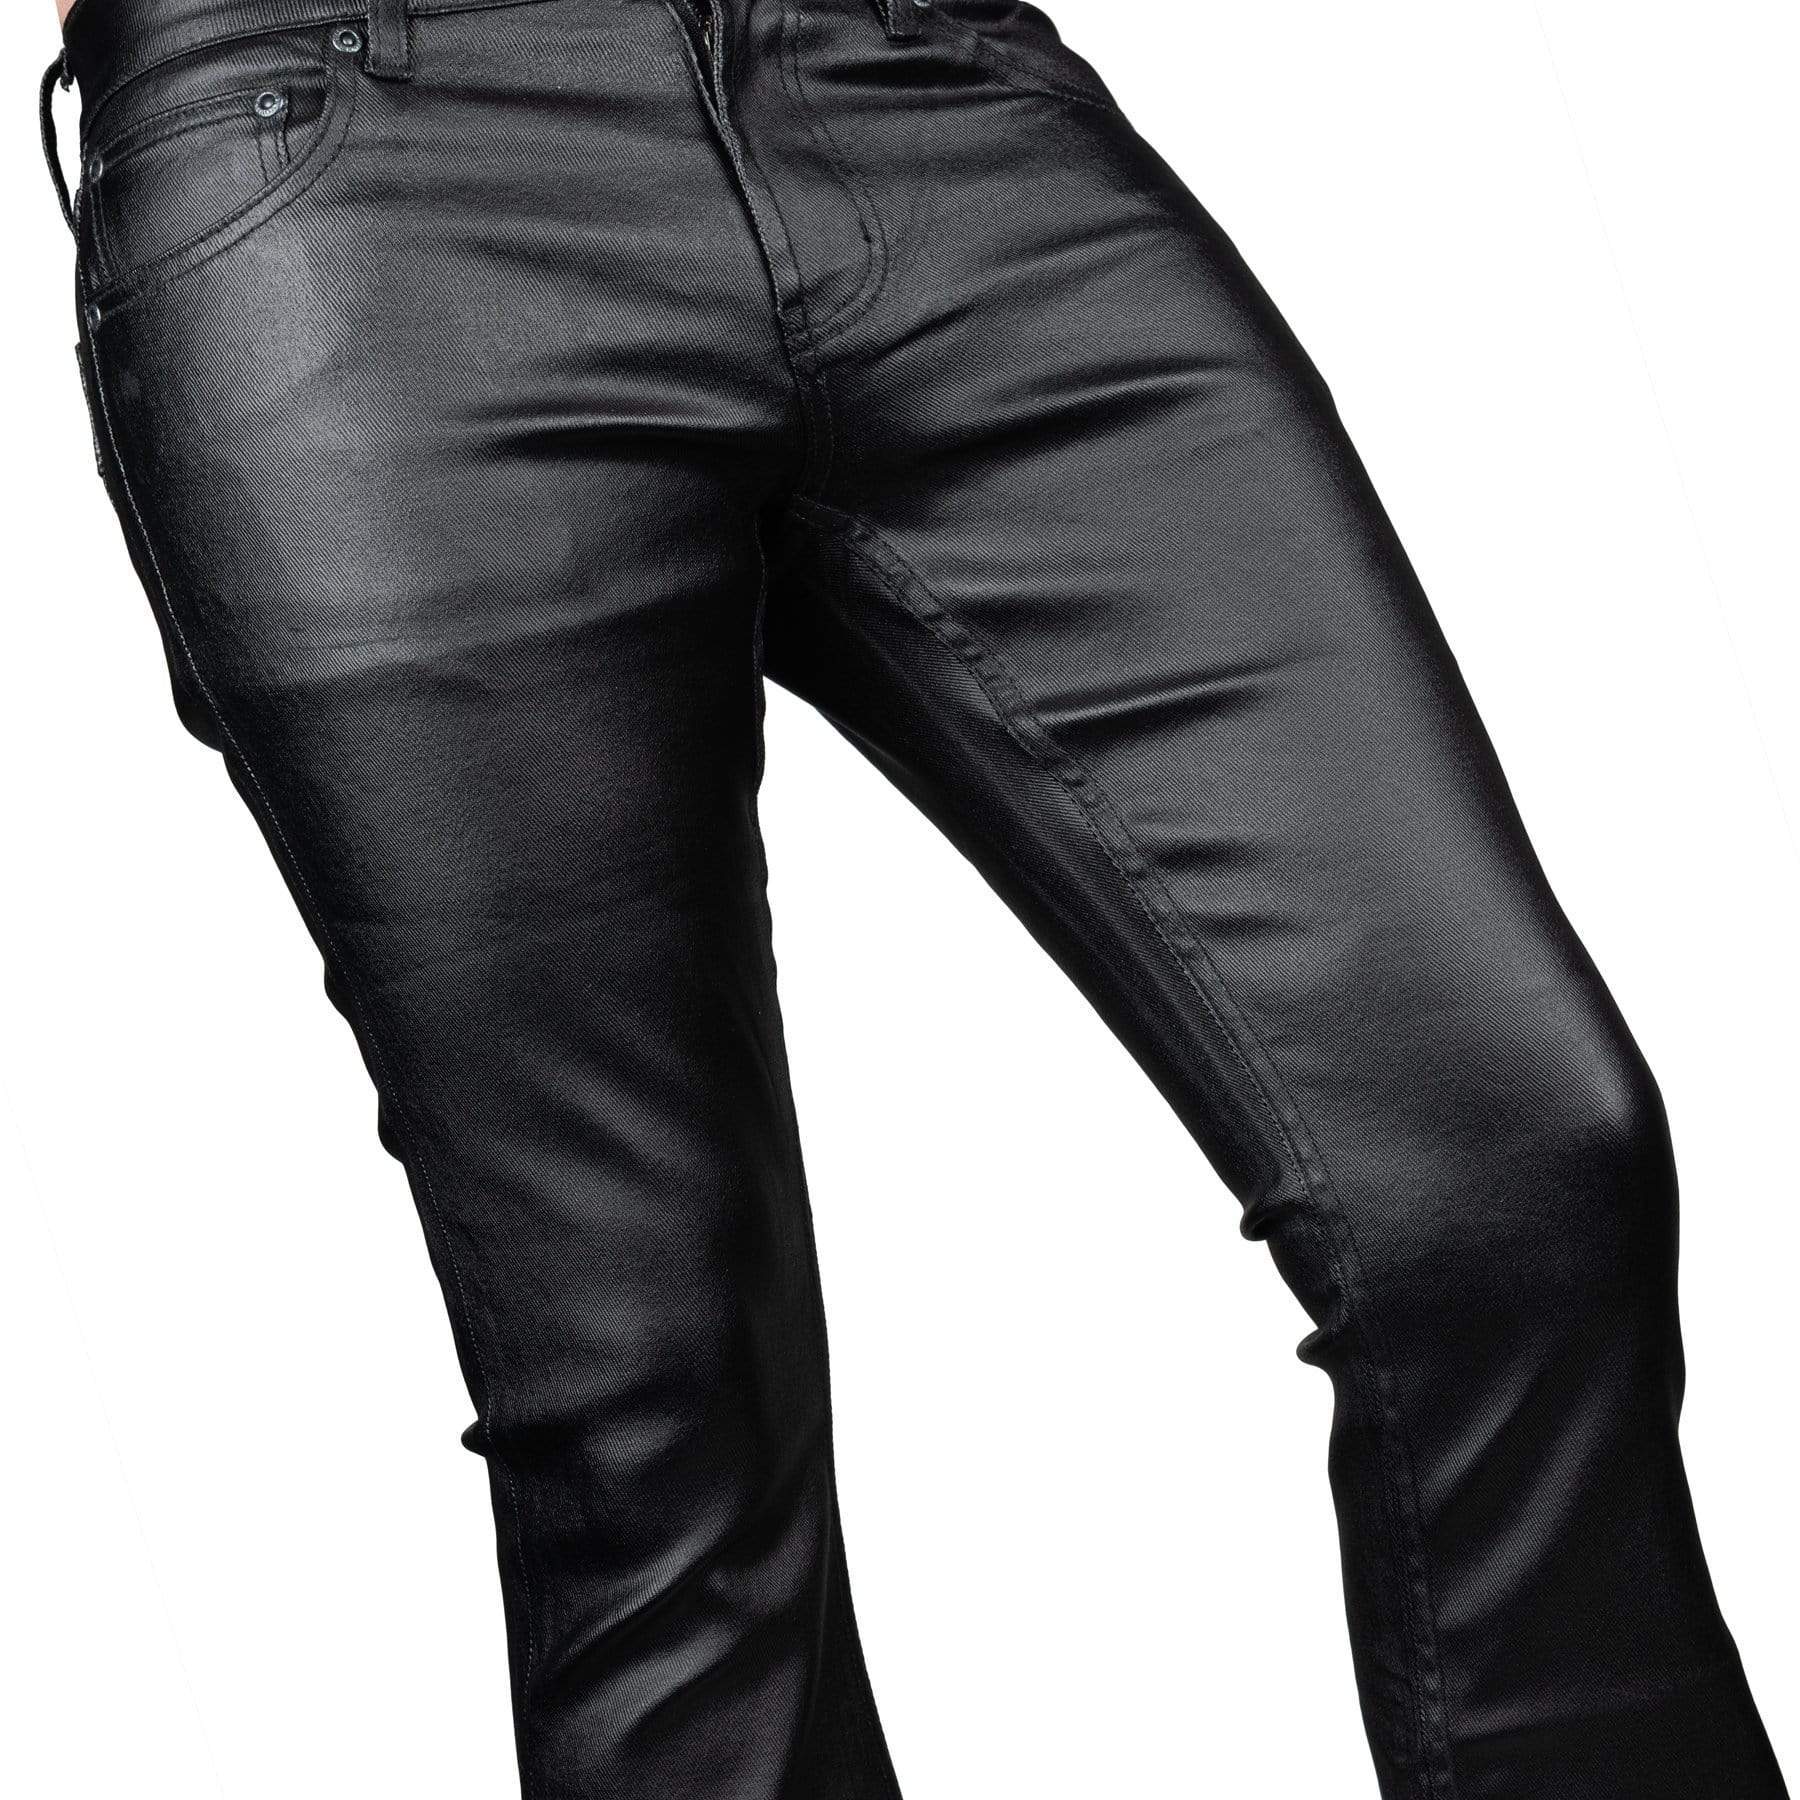 Wornstar Clothing Mens Pants Hellraiser Waxed Denim Jeans - Black